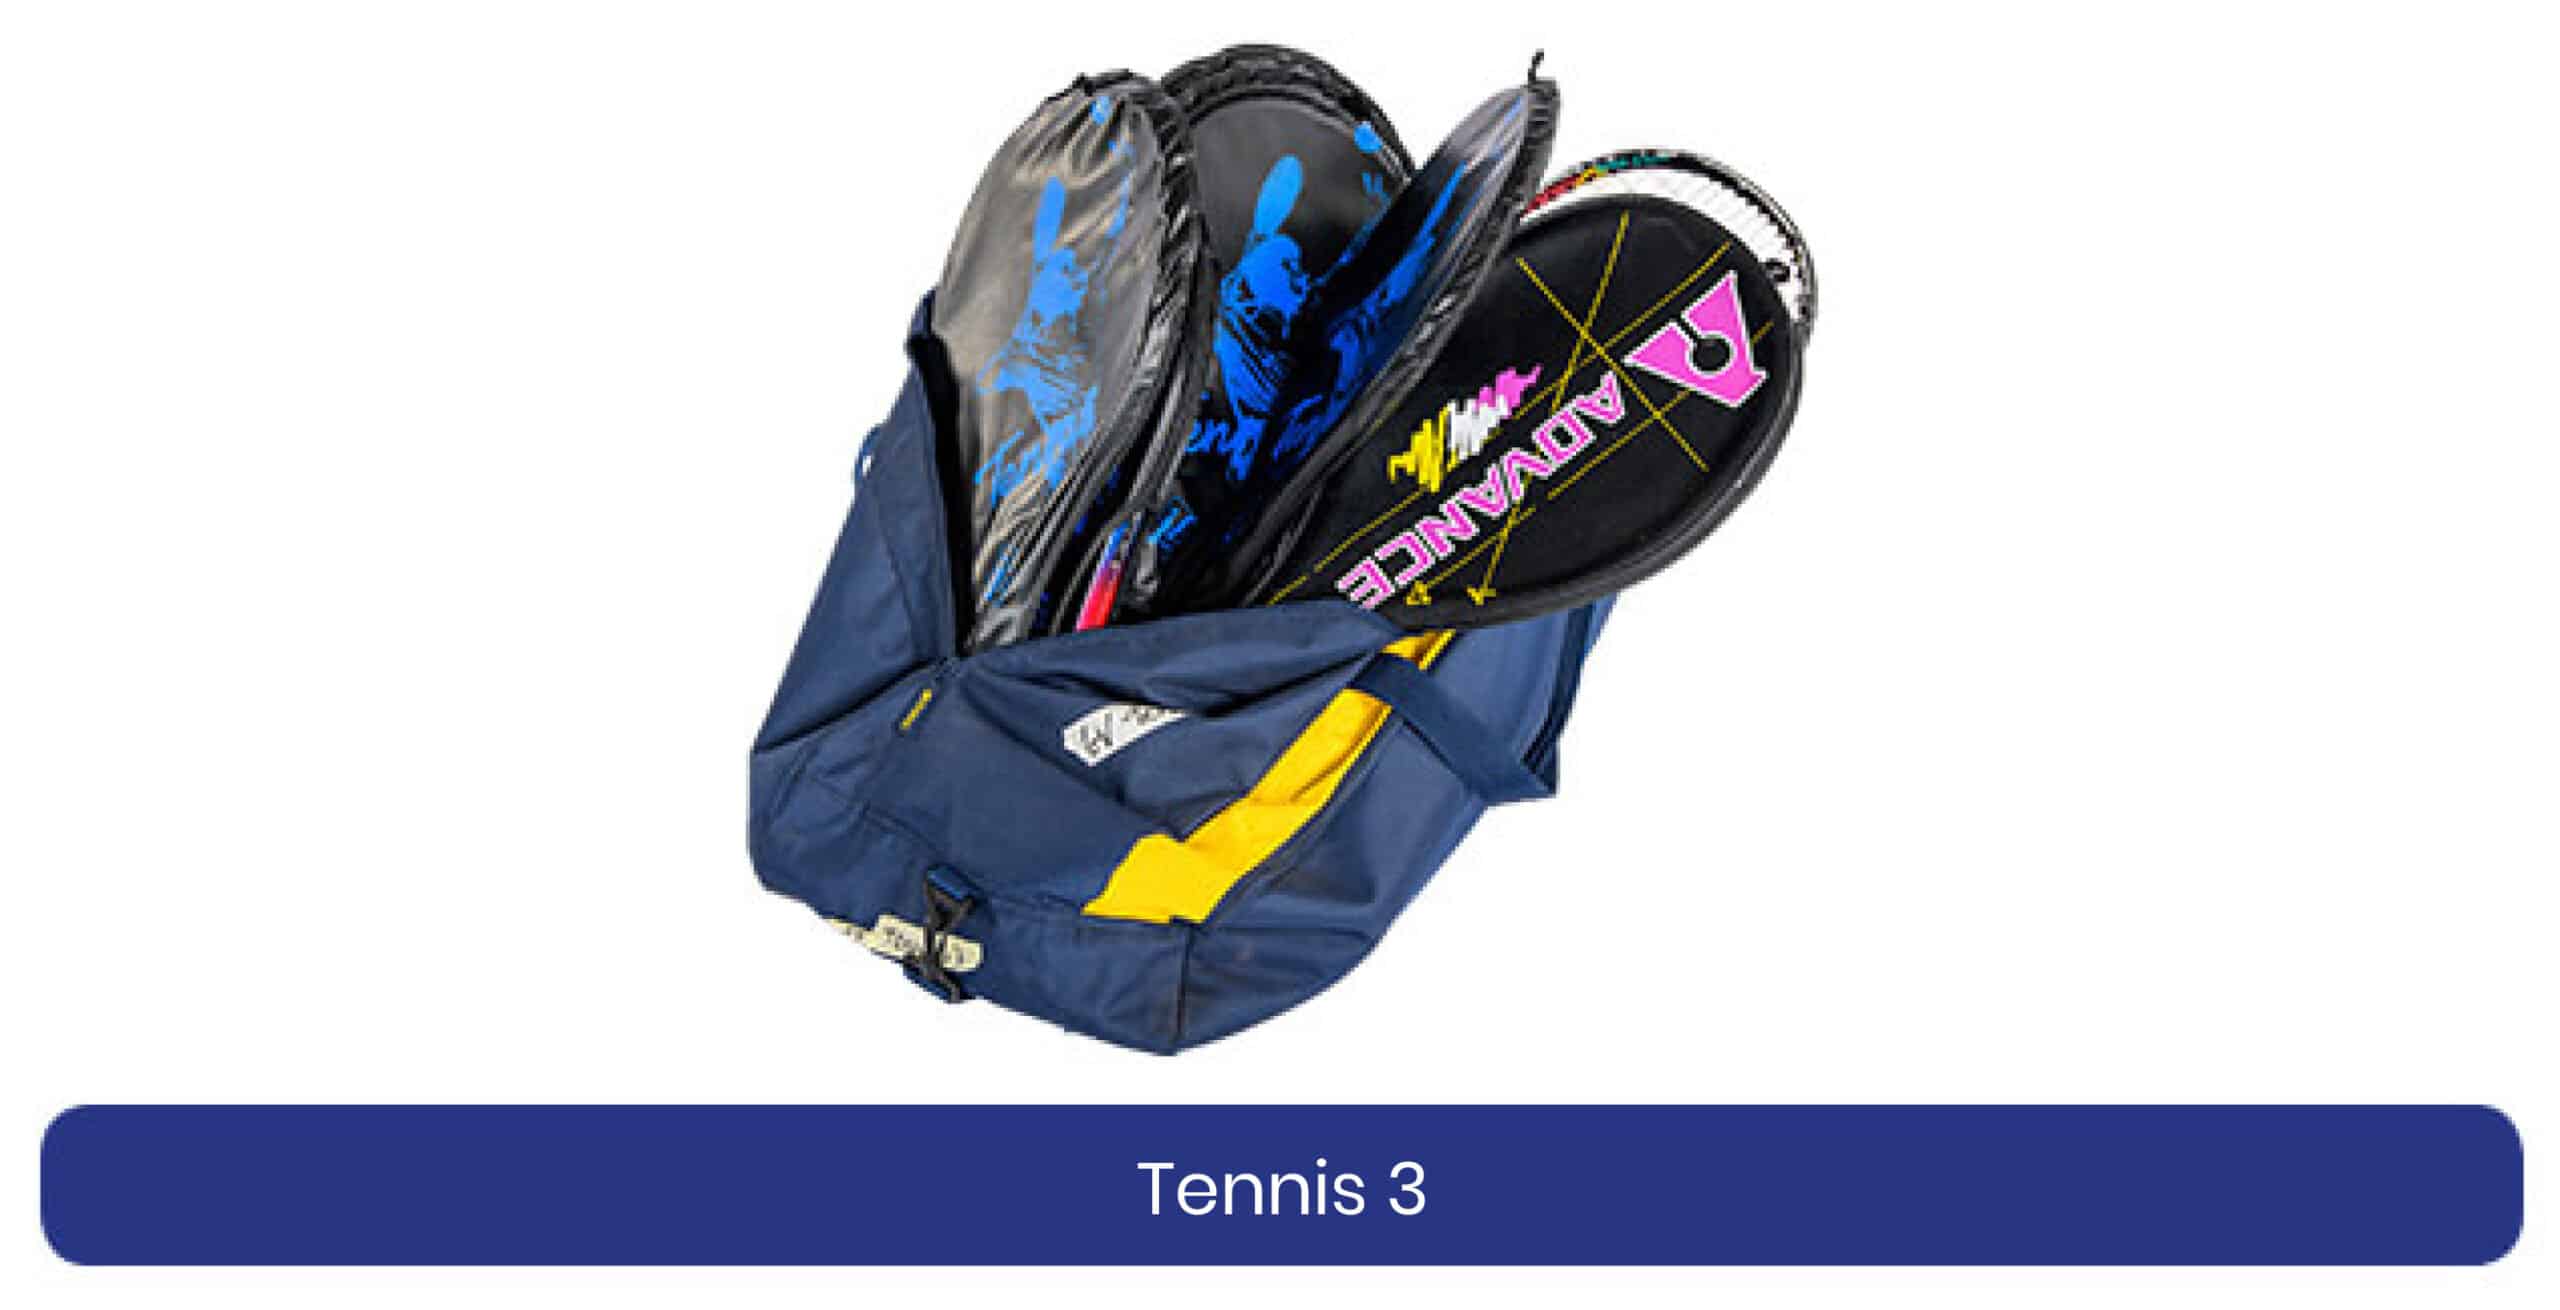 Tennis 3 lenen product